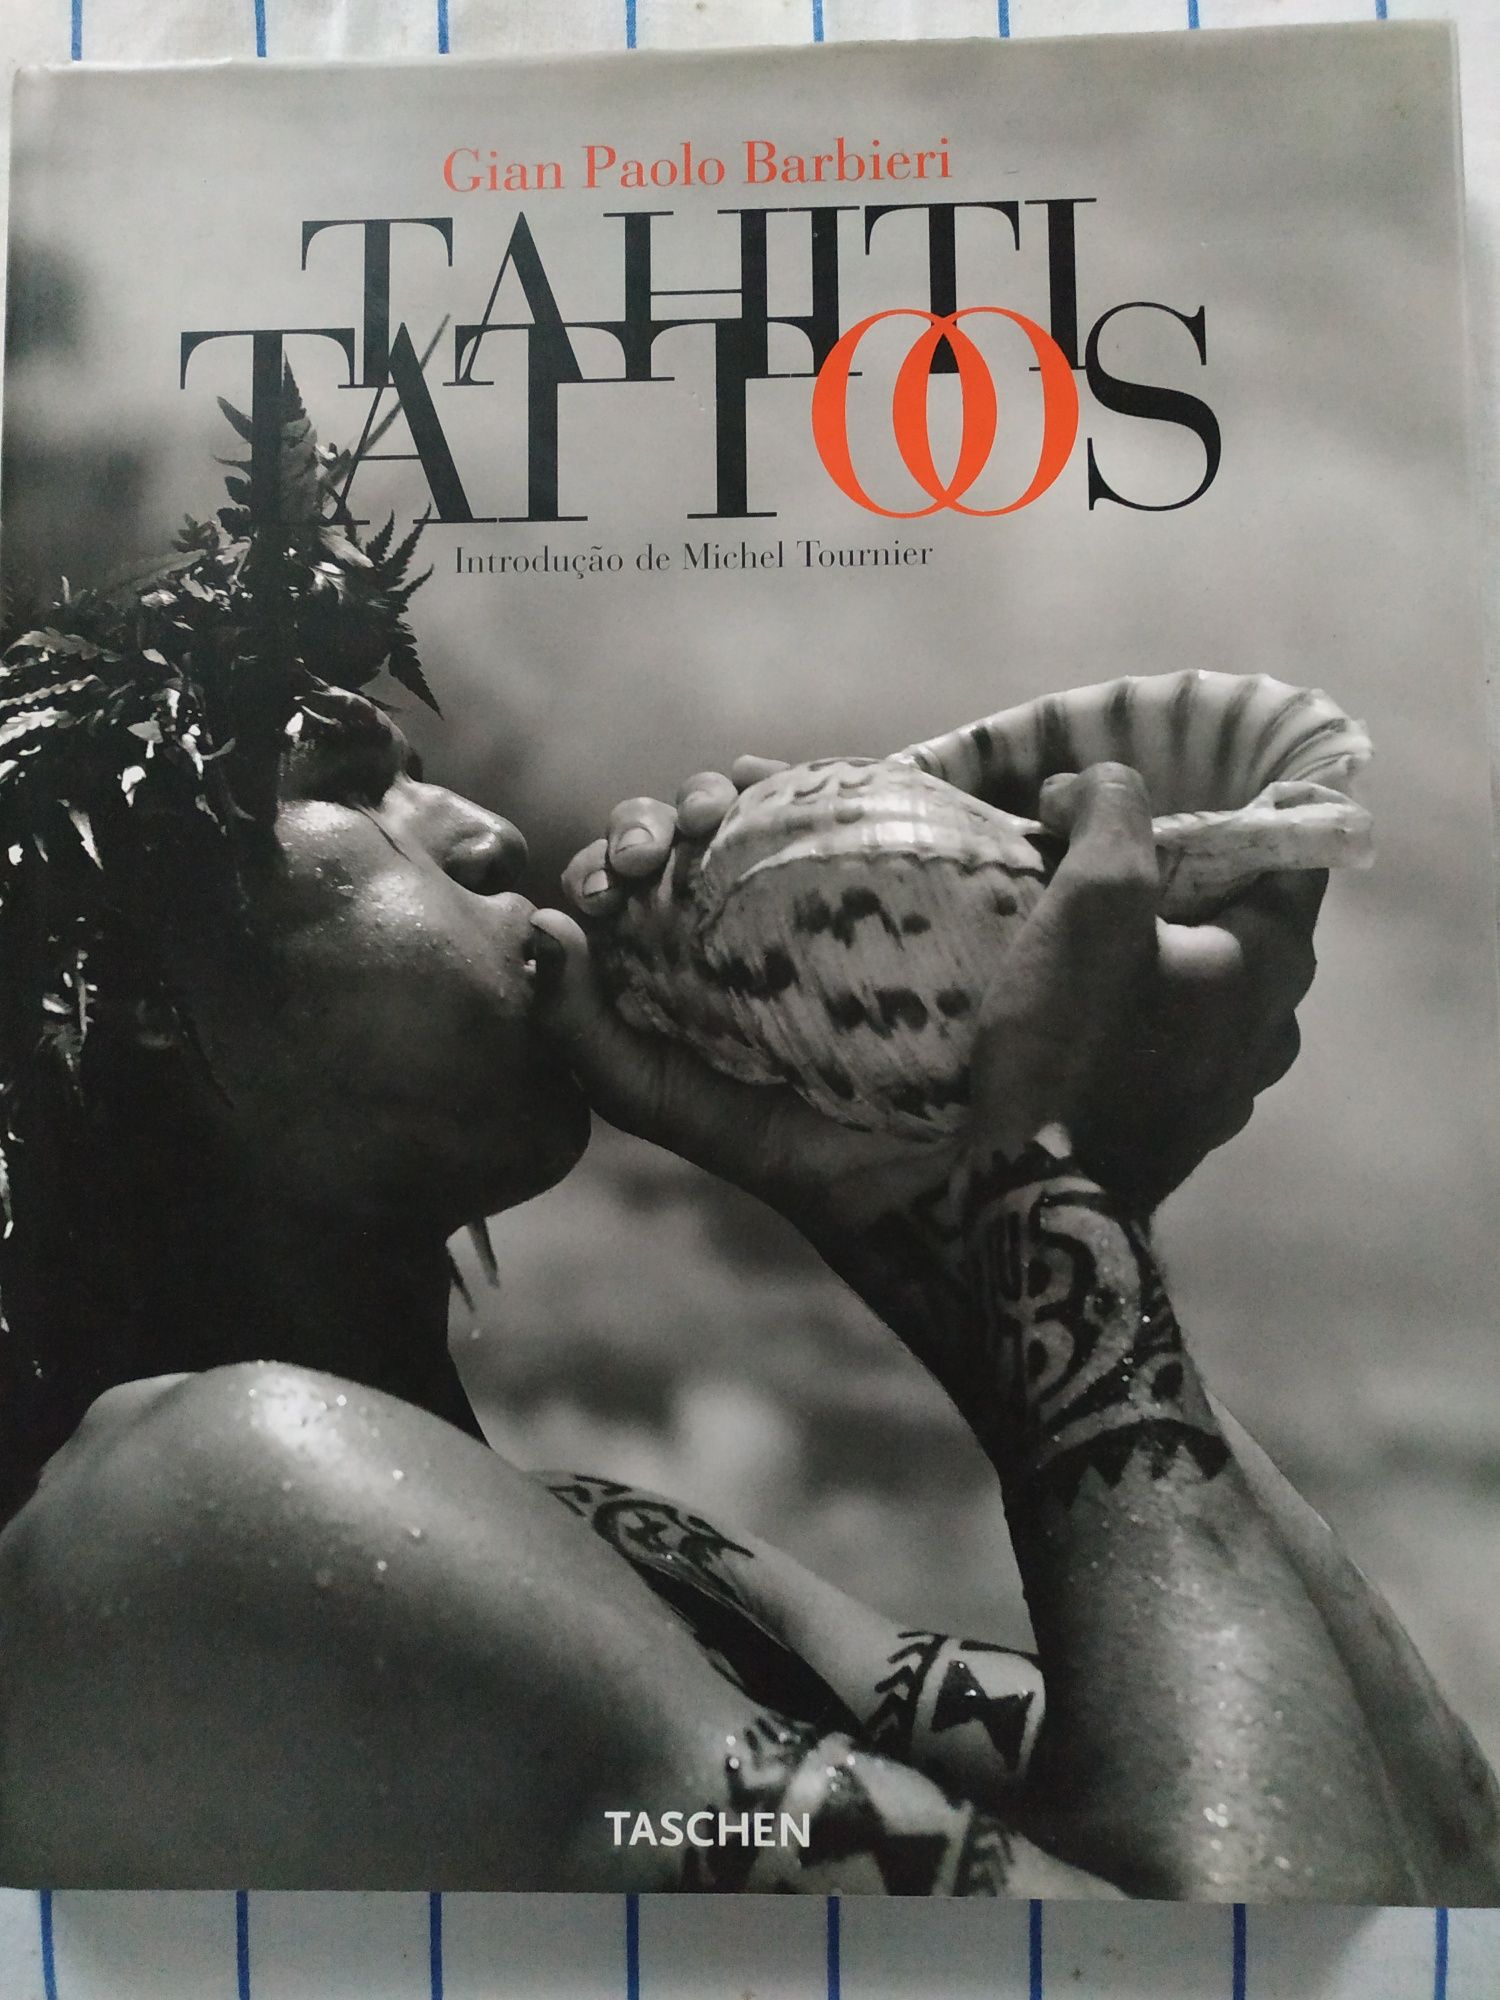 Thaiti Tattoos da Taschen